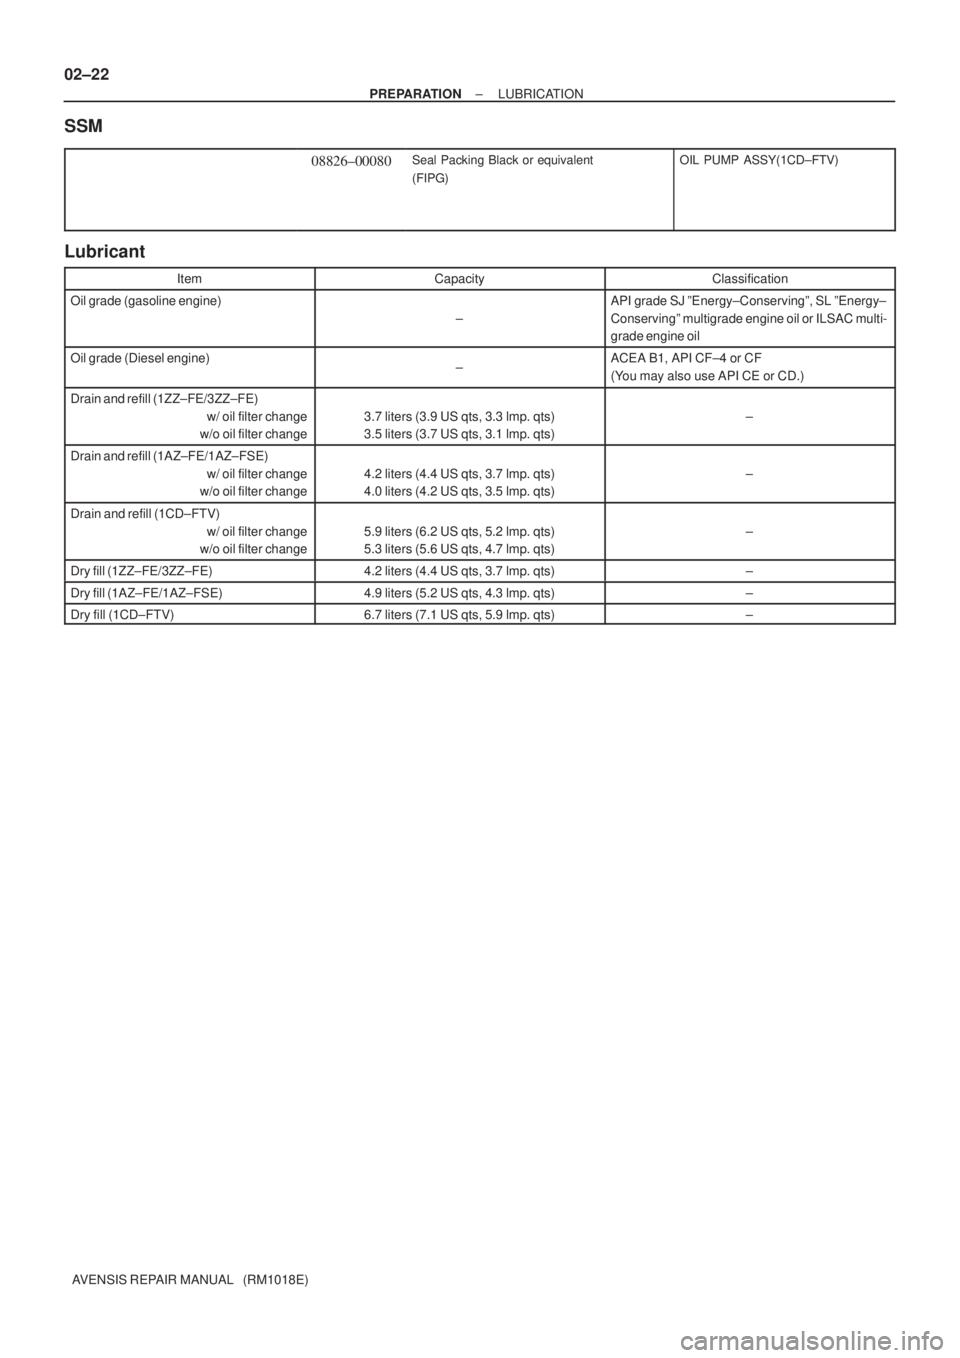 TOYOTA AVENSIS 2002  Repair Manual 02±22
± PREPARATIONLUBRICATION
AVENSIS REPAIR MANUAL   (RM1018E)
SSM
08826±00080Seal Packing Black or equivalent
(FIPG)OIL PUMP ASSY(1CD±FTV)
Lubricant
ItemCapacityClassification
Oil grade (gasoli